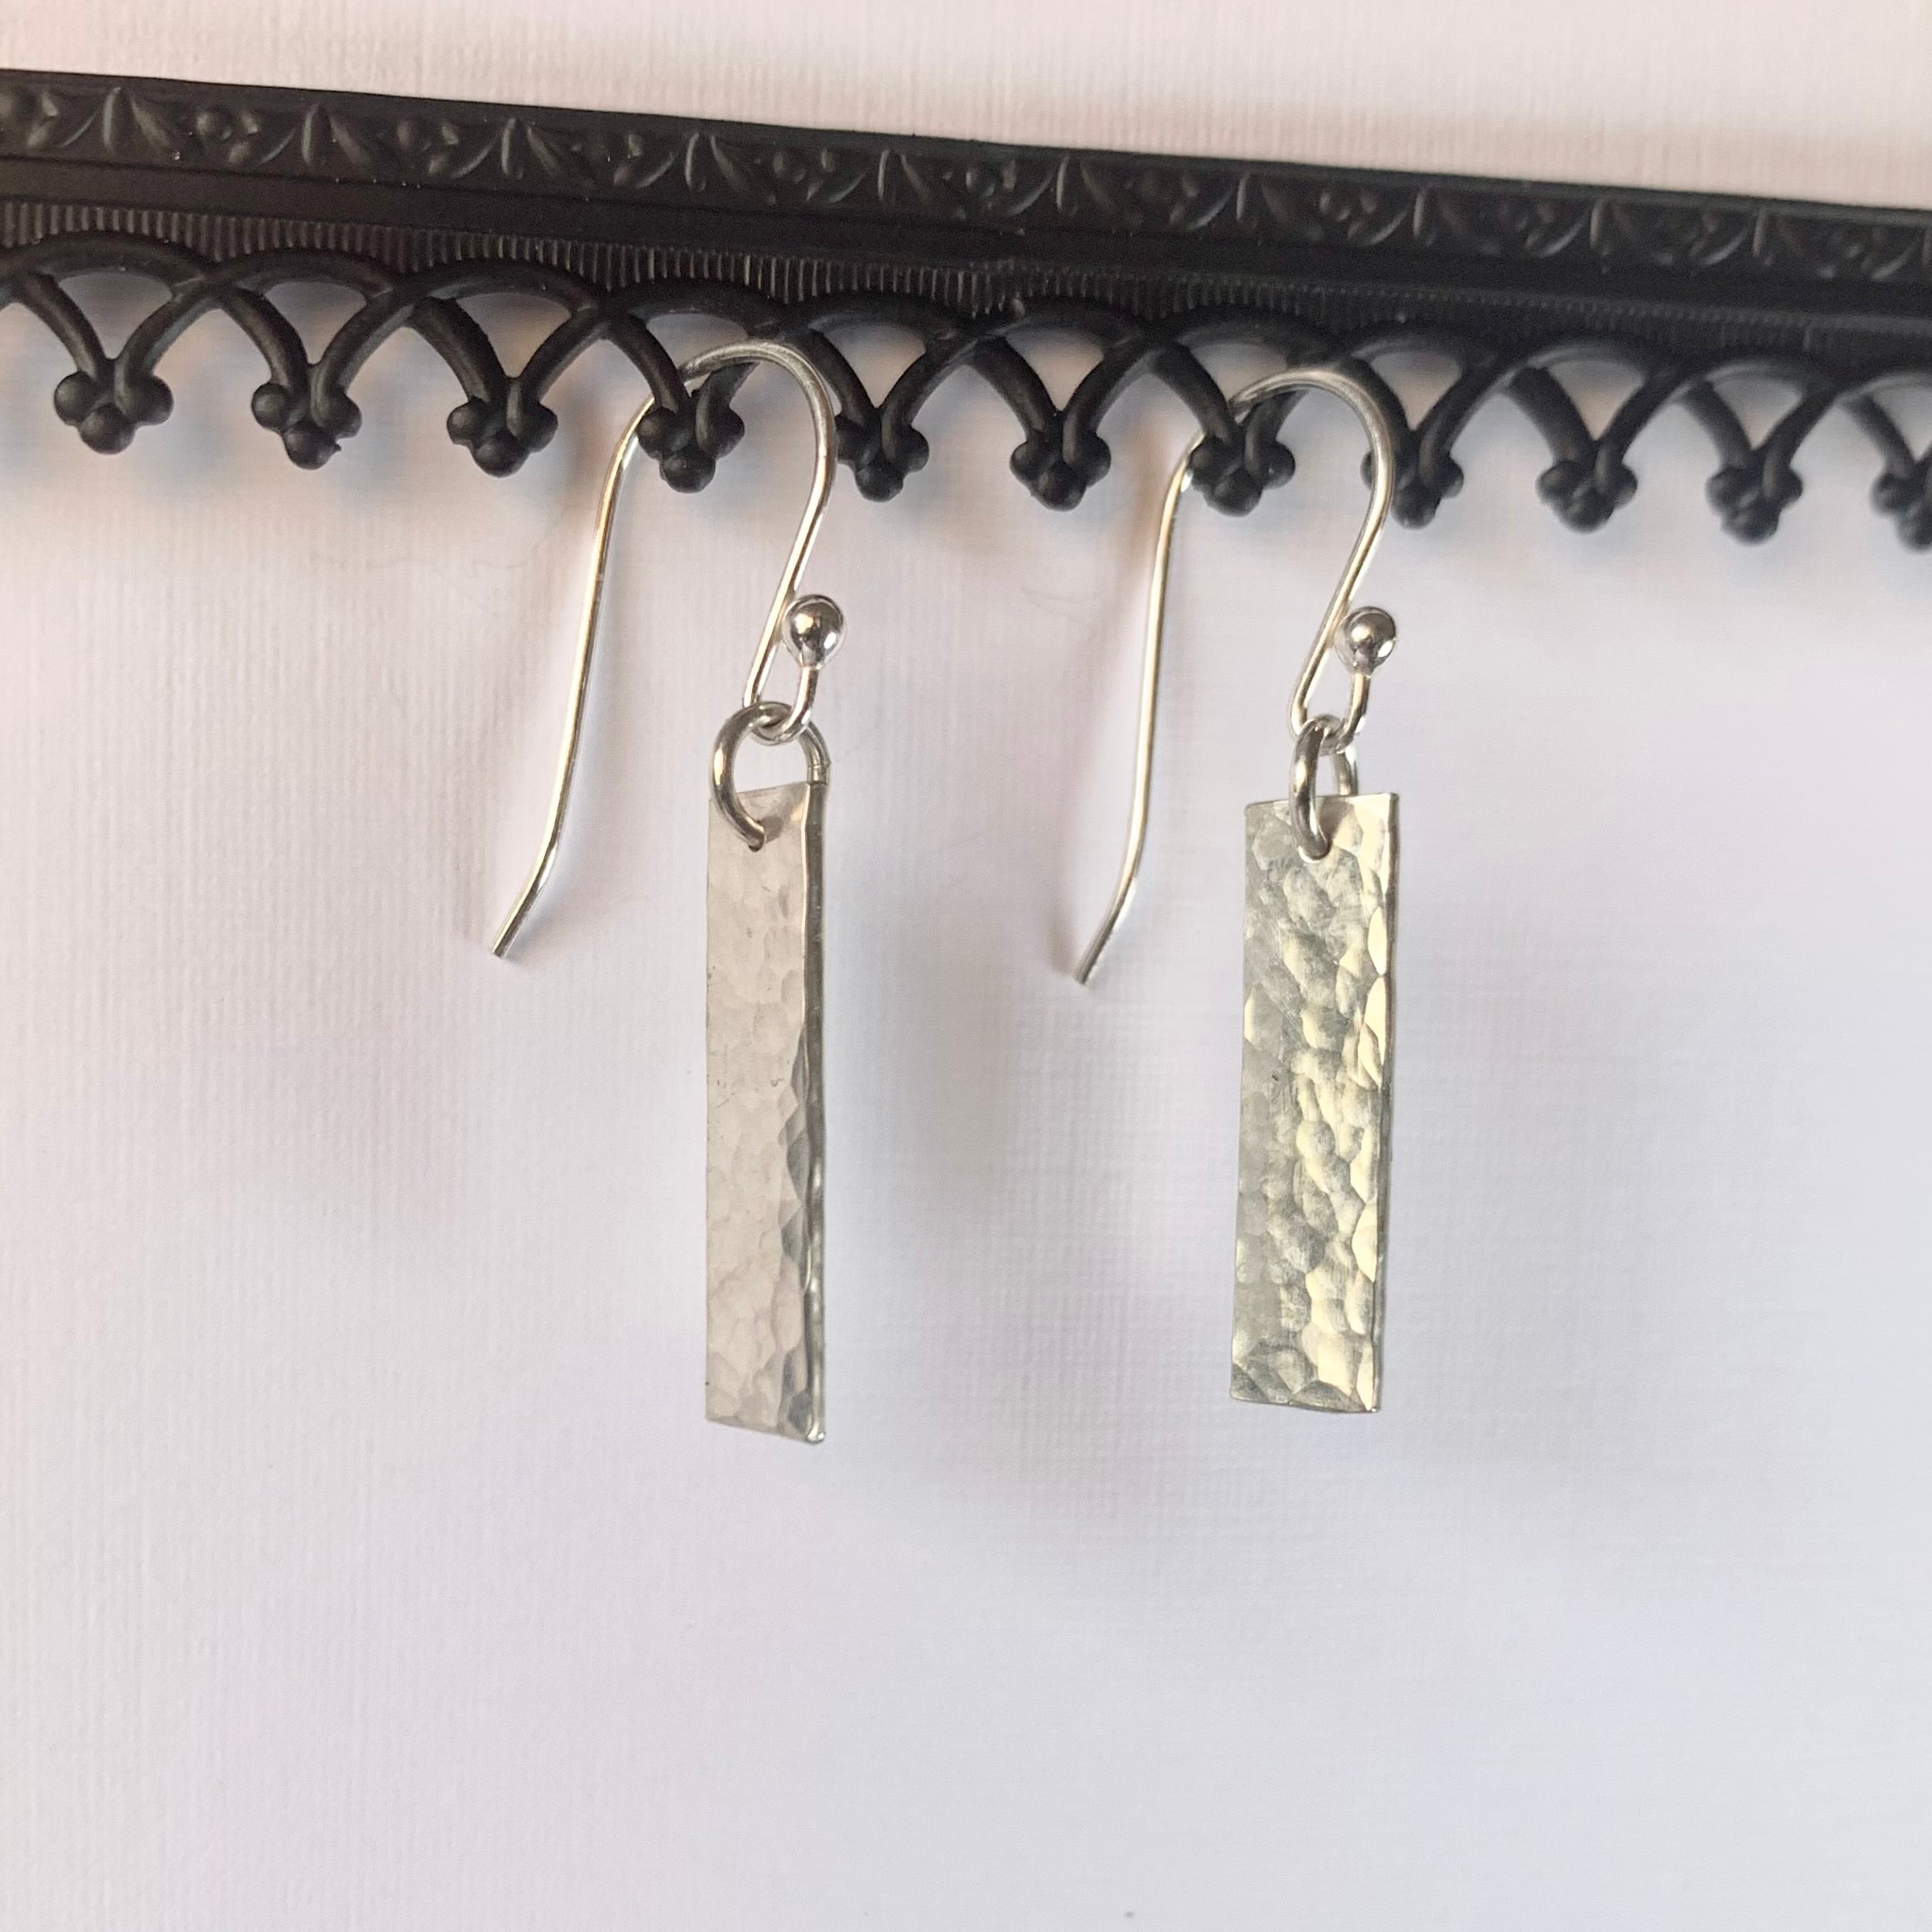 Geometric textured bar earrings in sterling silver